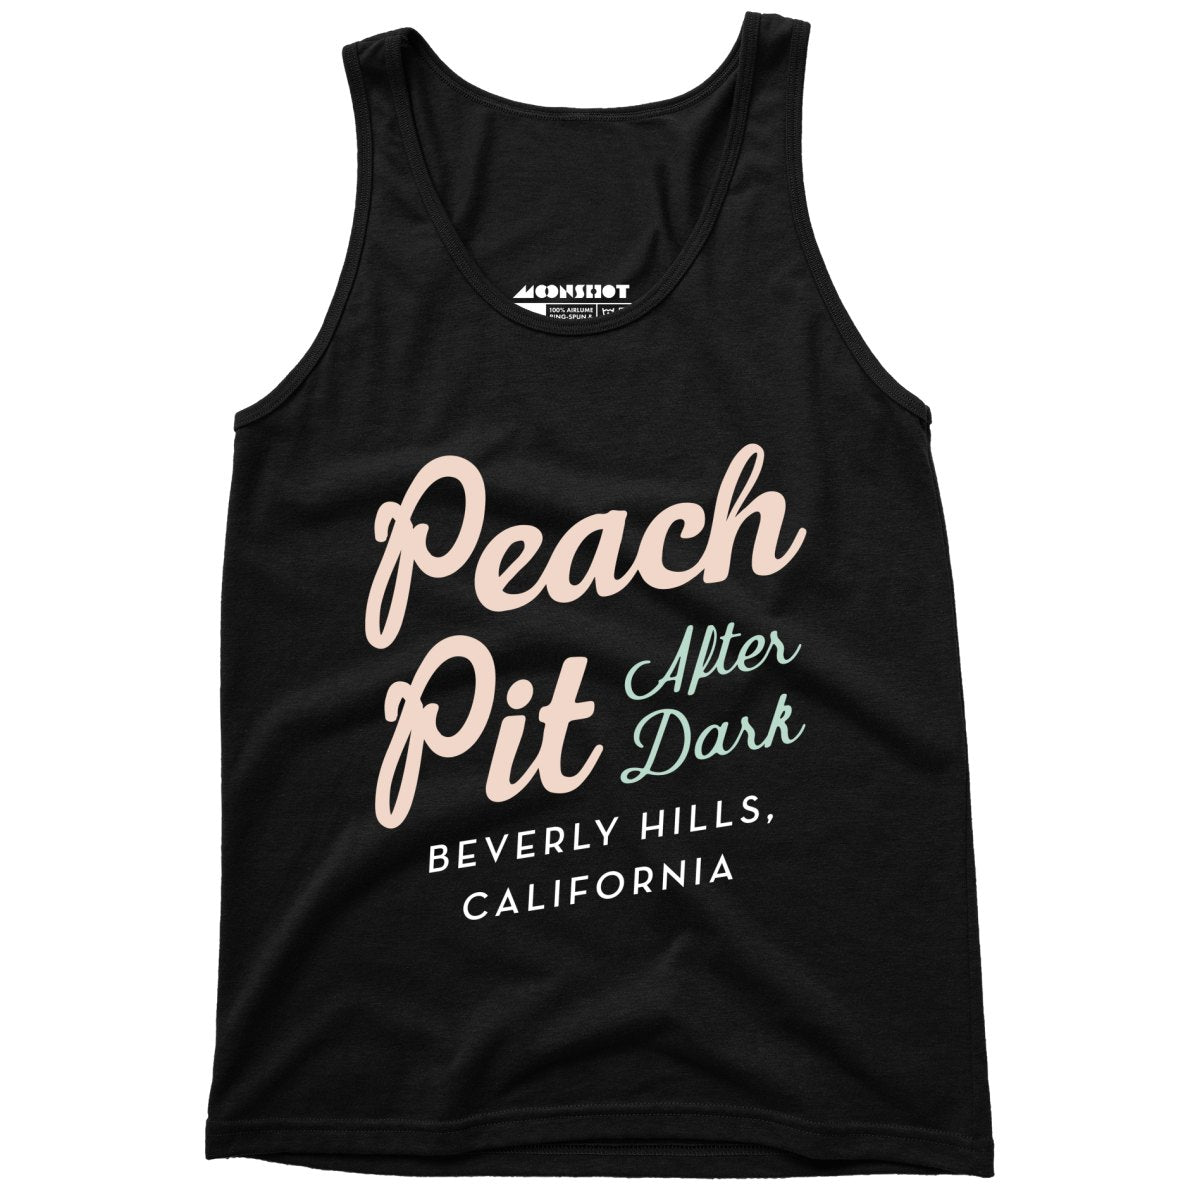 Peach Pit After Dark 90210 v2 - Unisex Tank Top